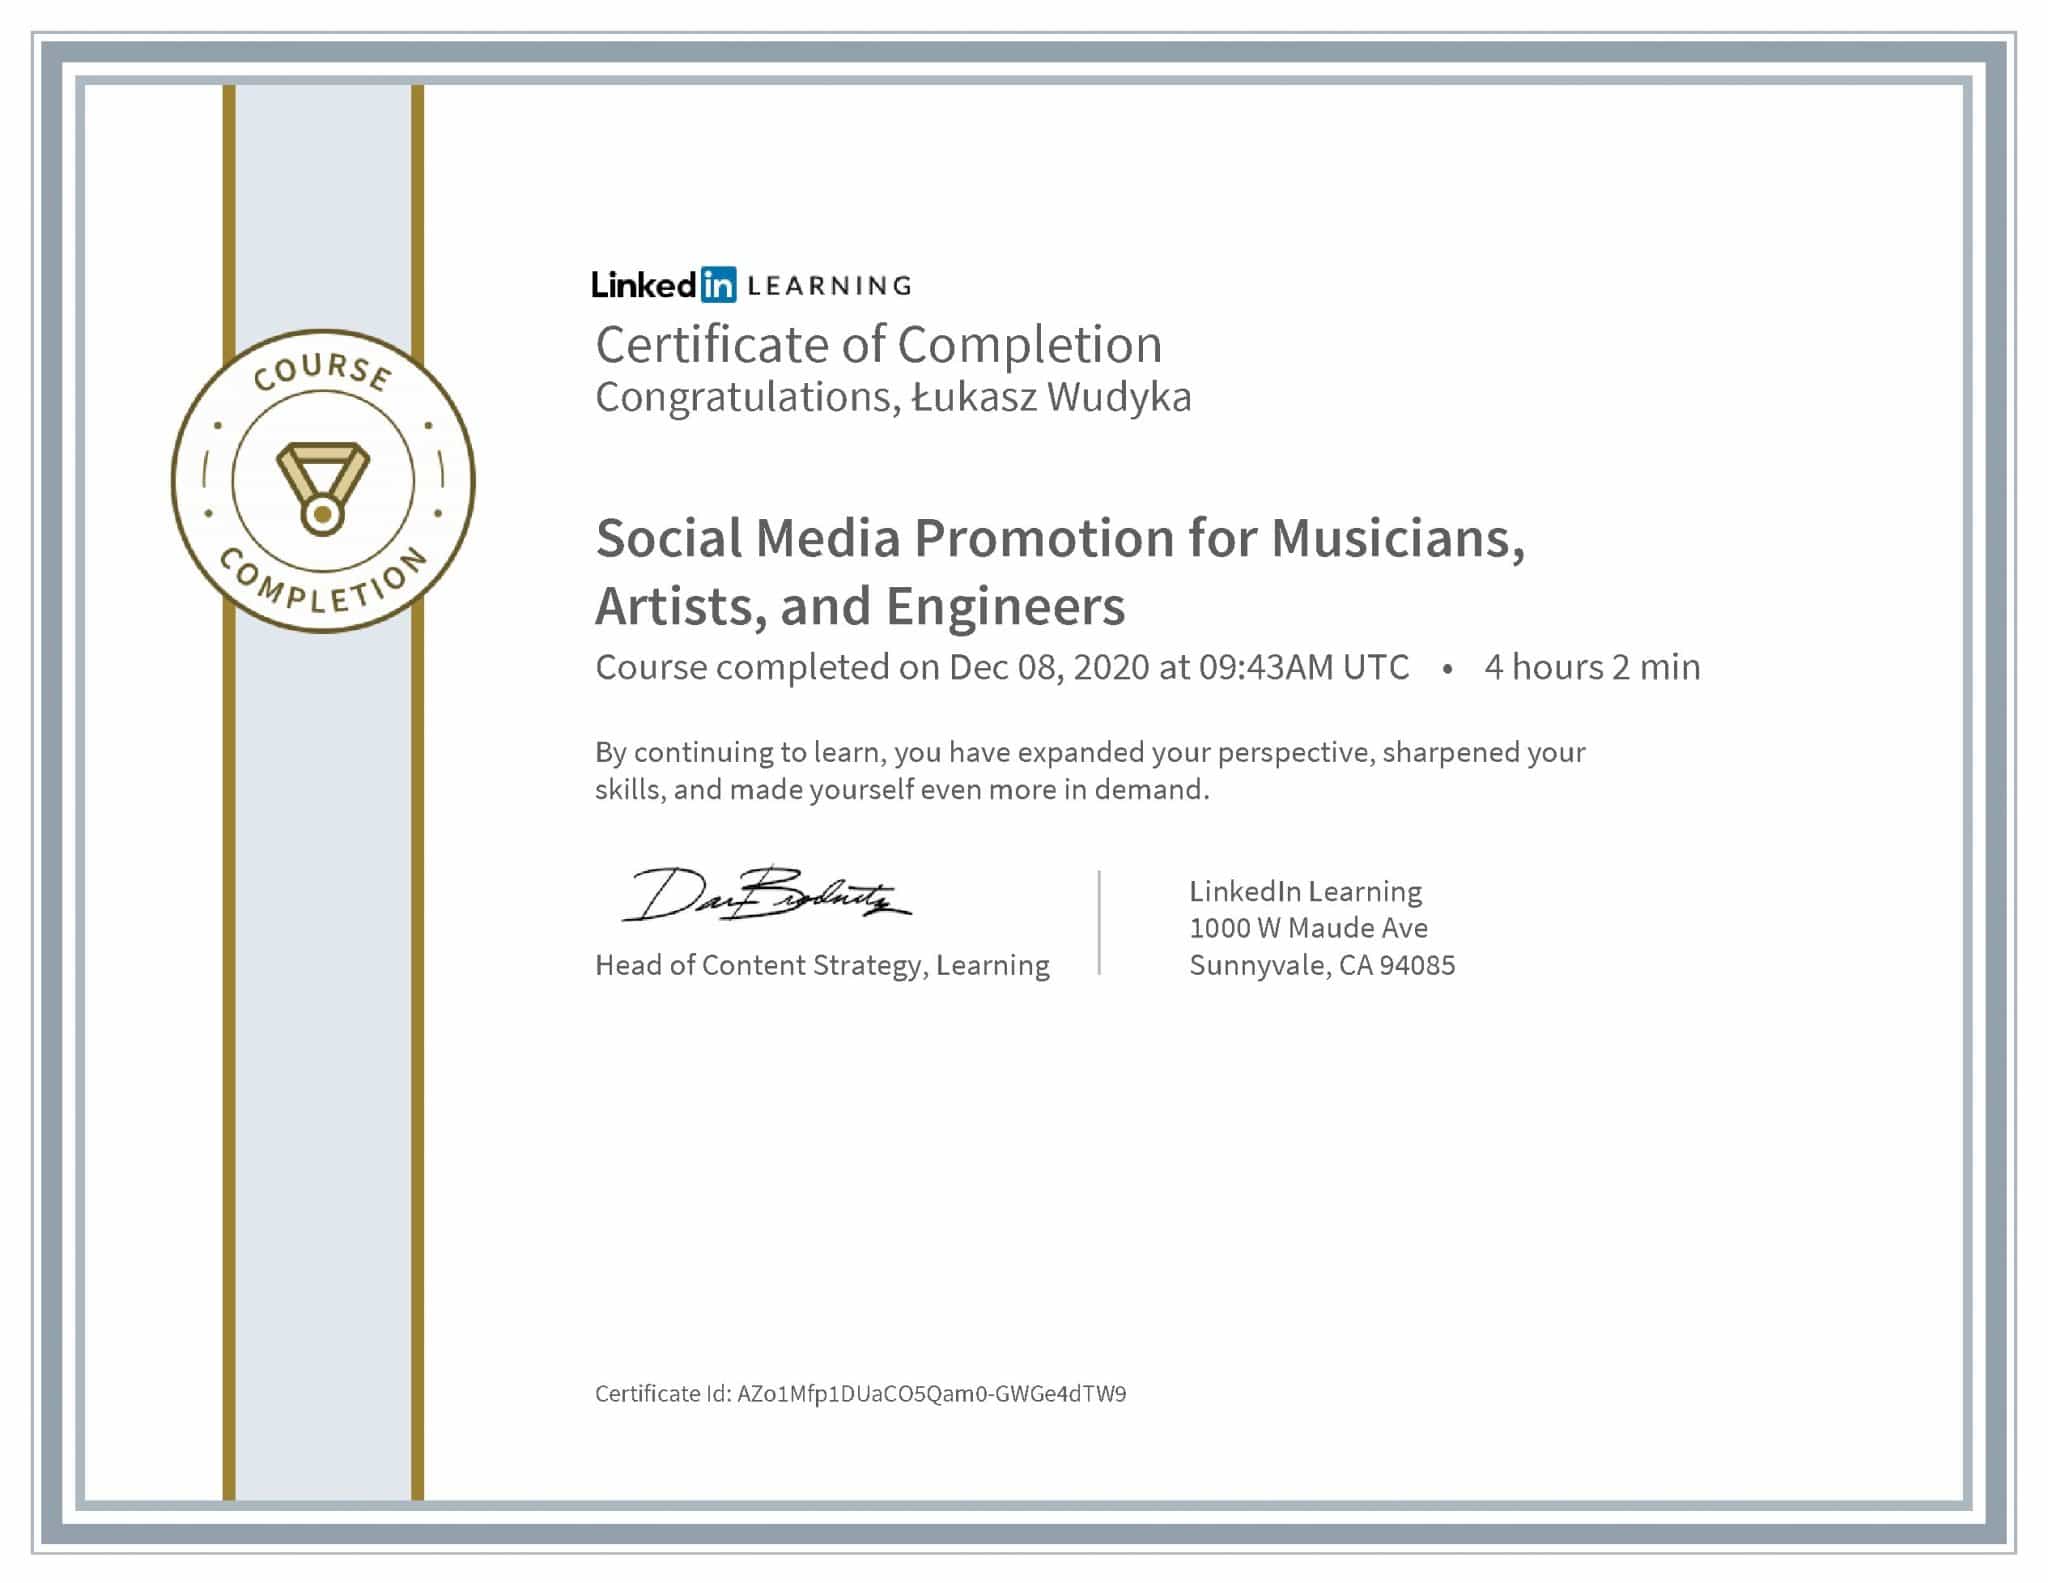 Łukasz Wudyka certyfikat LinkedIn Social Media Promotion for Musicians, Artists, and Engineers